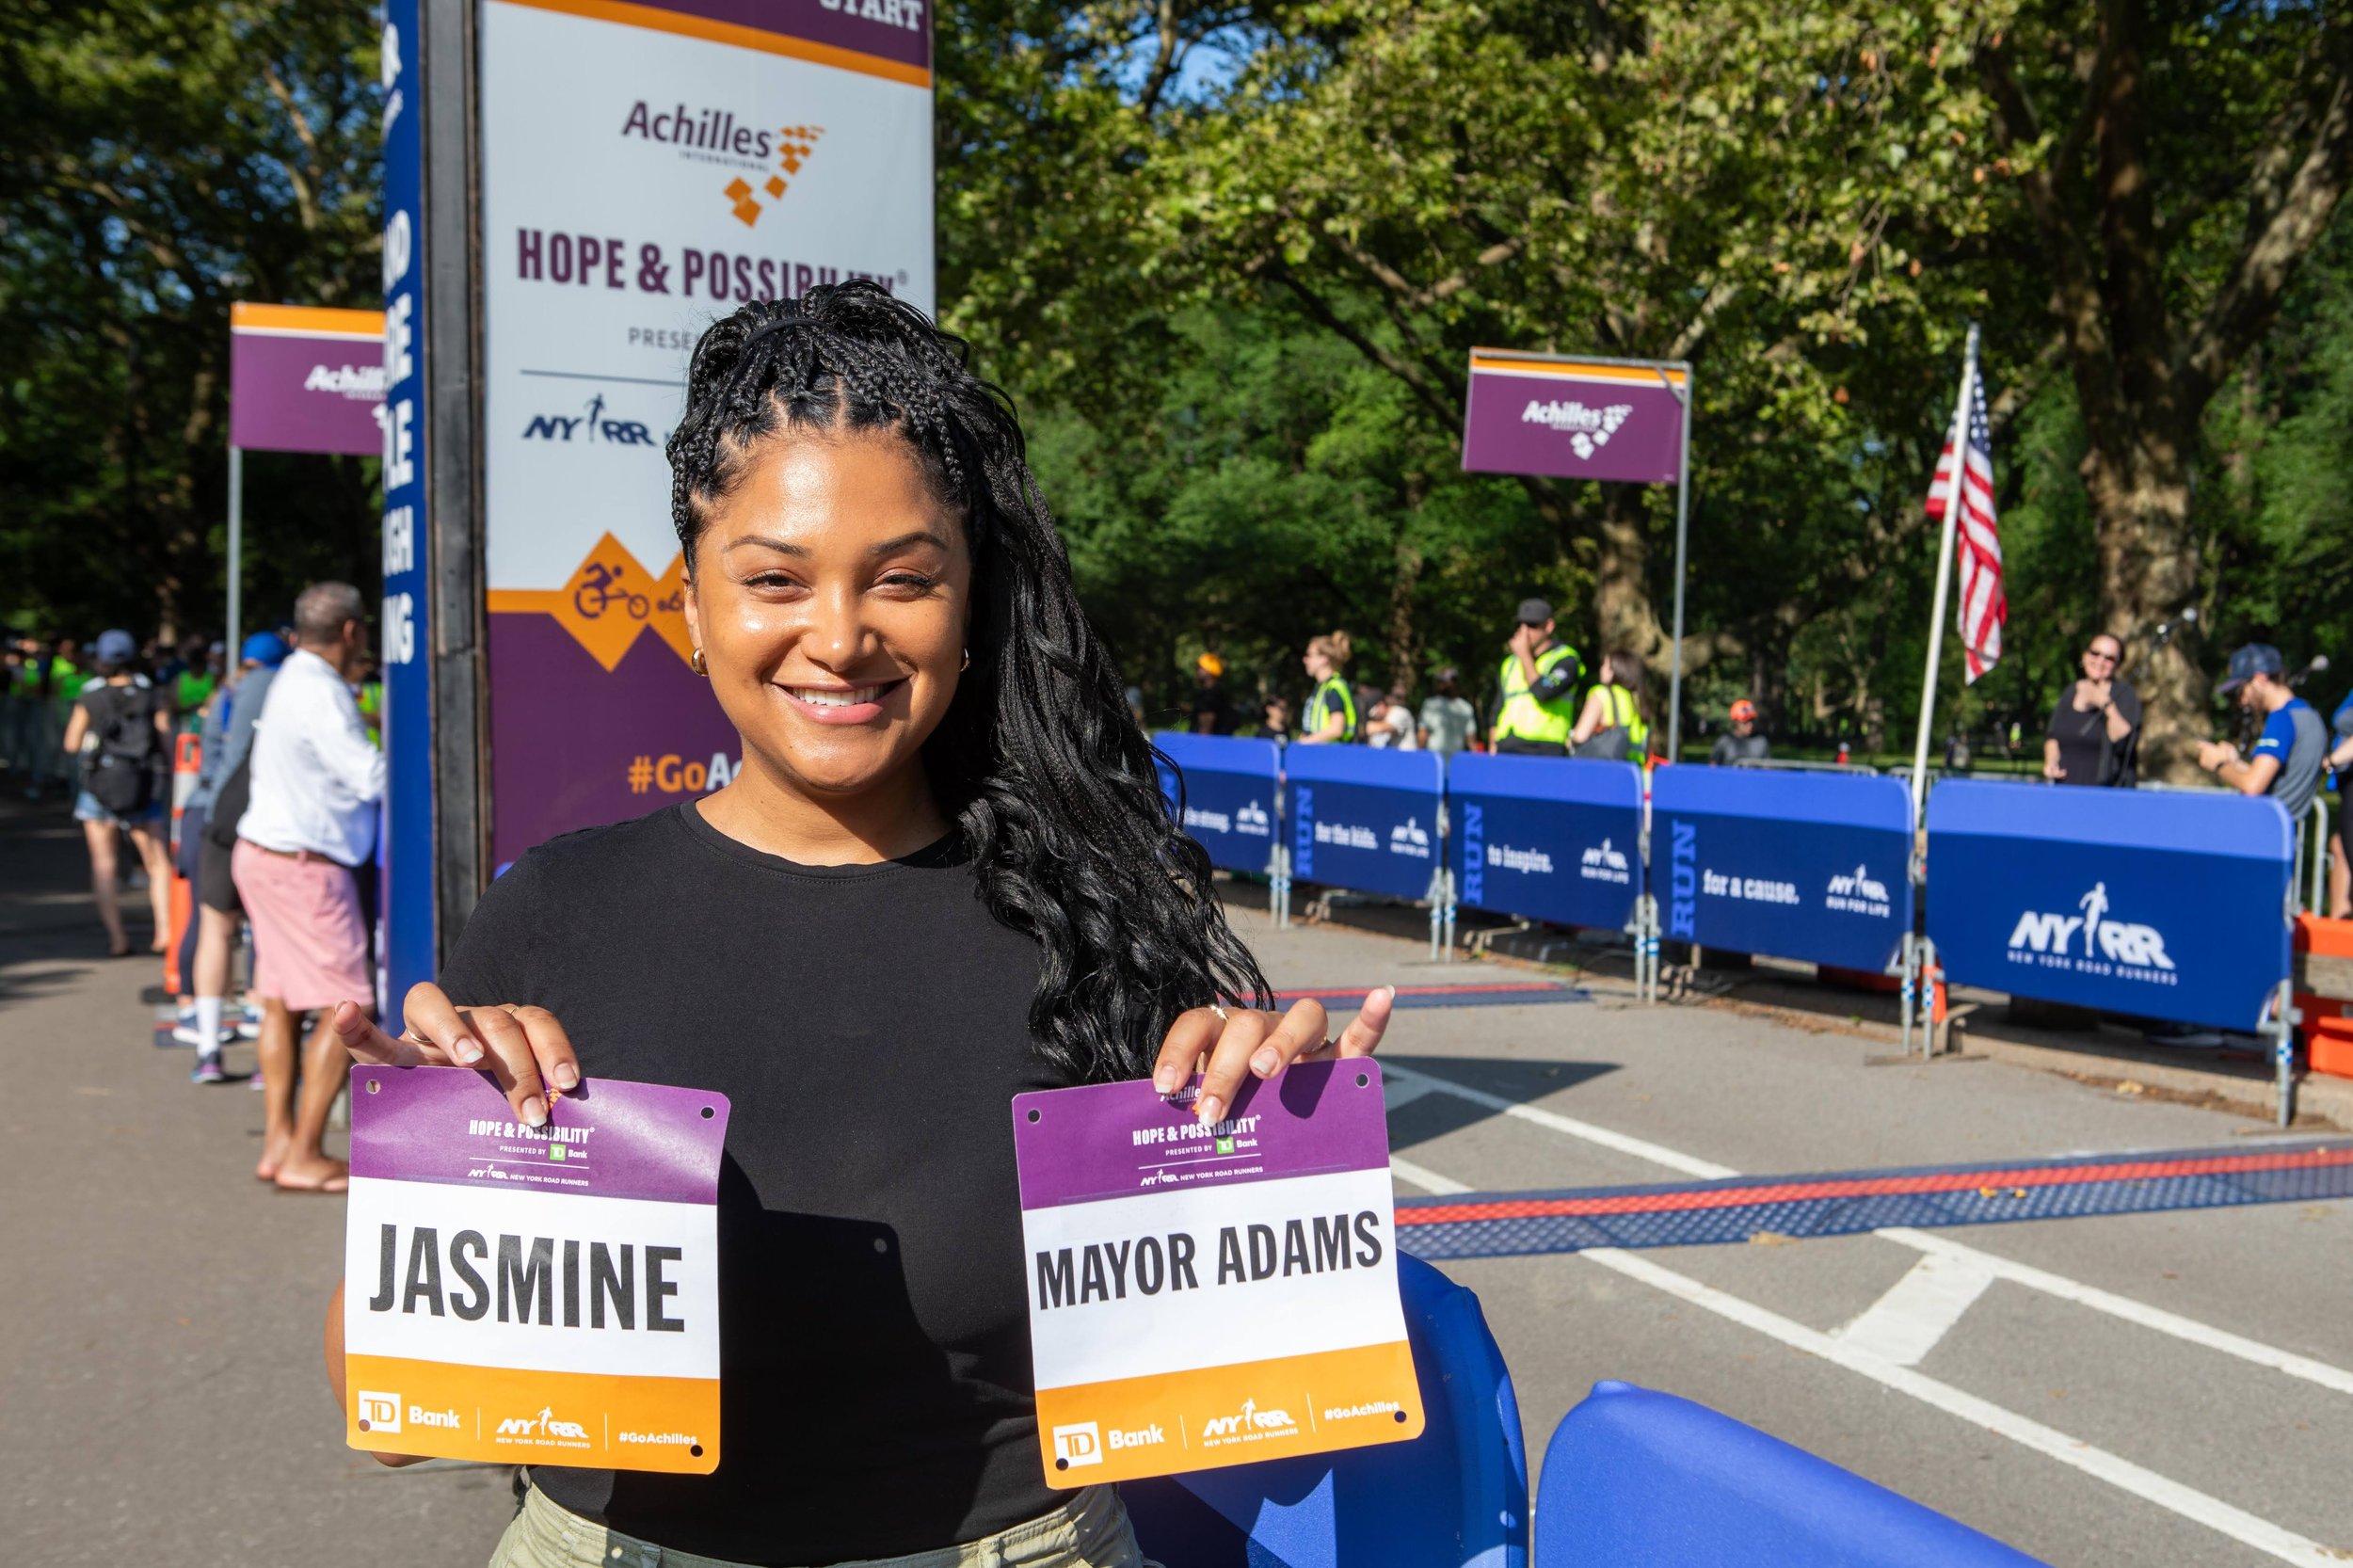  Jasmine Ray holding two race bibs that read “Jasmine” and “Mayor Adams” 